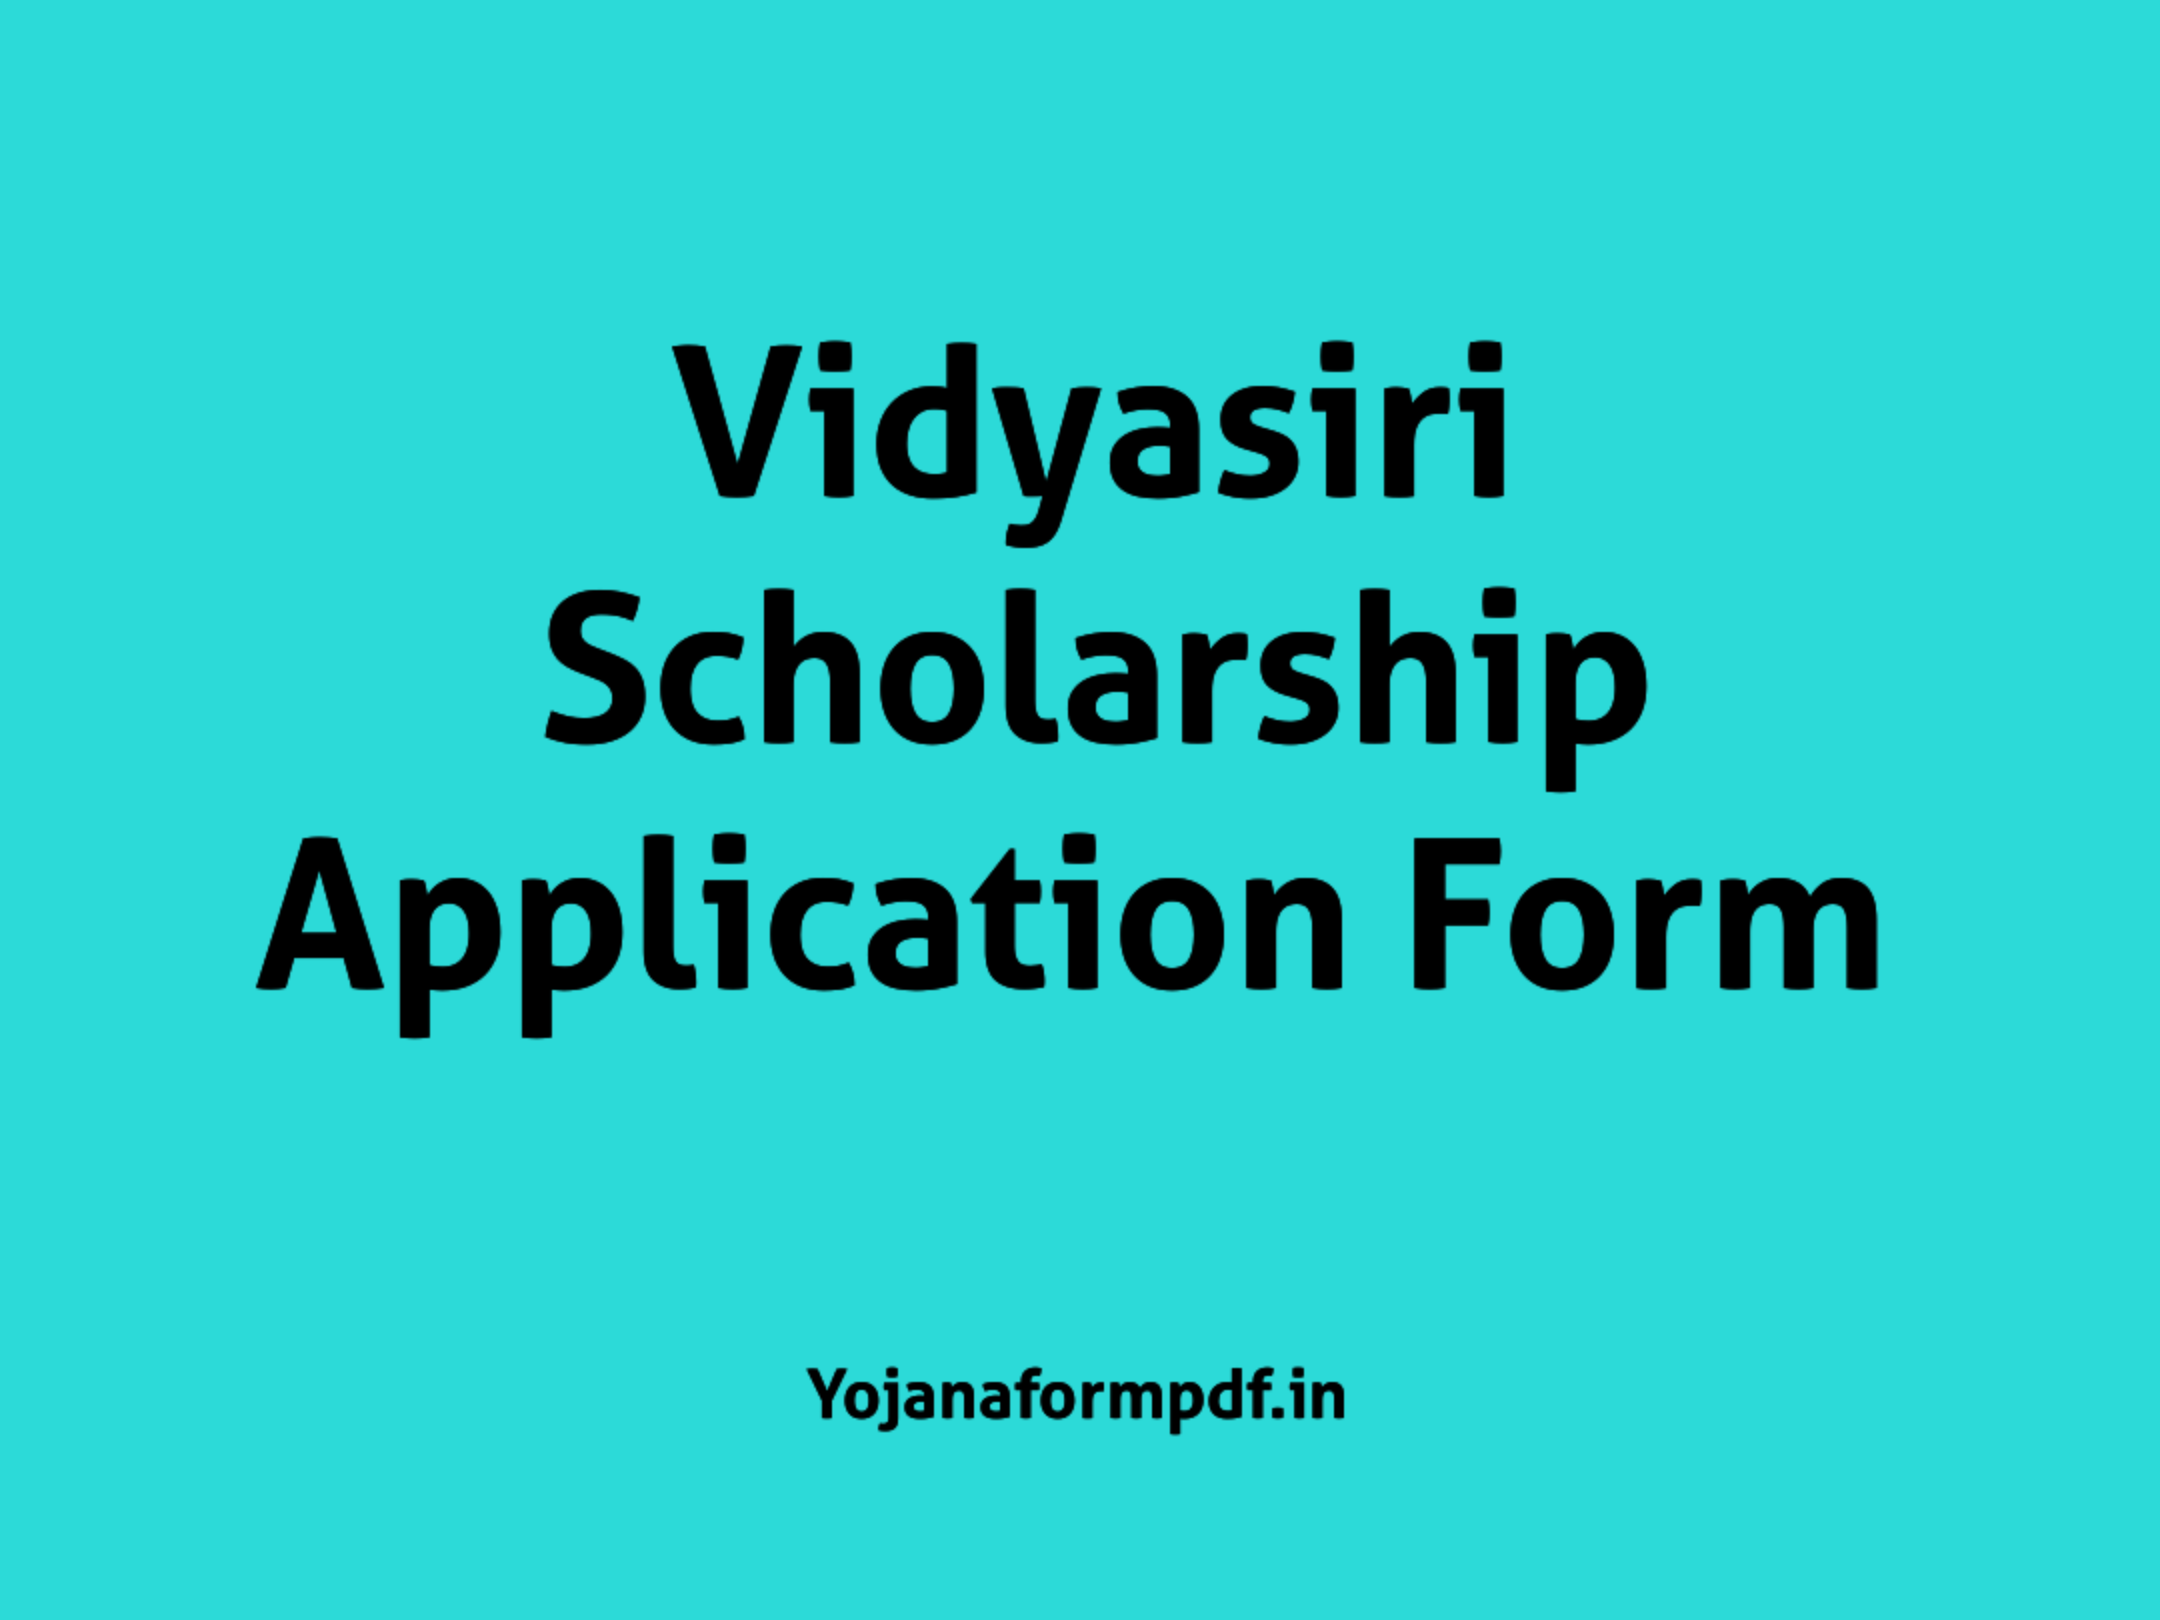 Vidyasiri Scholarship Application Form PDF